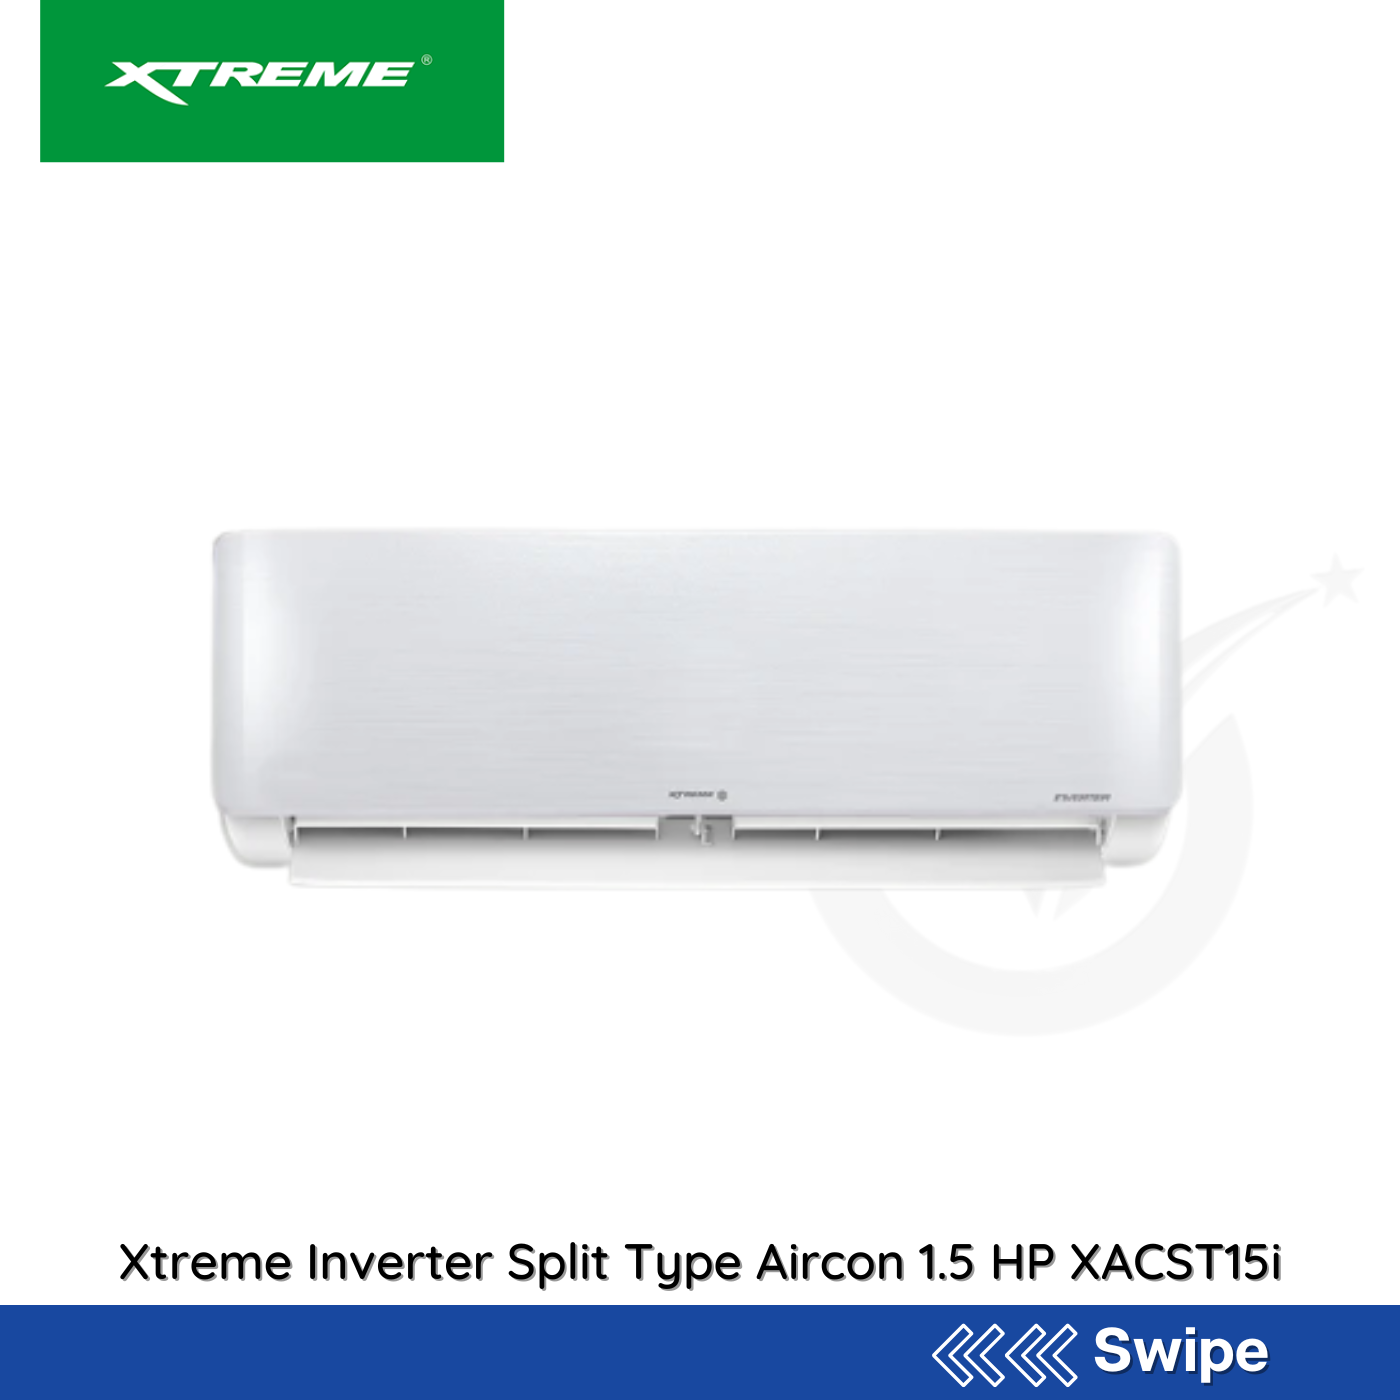 Xtreme Inverter Split Type Aircon 1.5 HP XACST15i